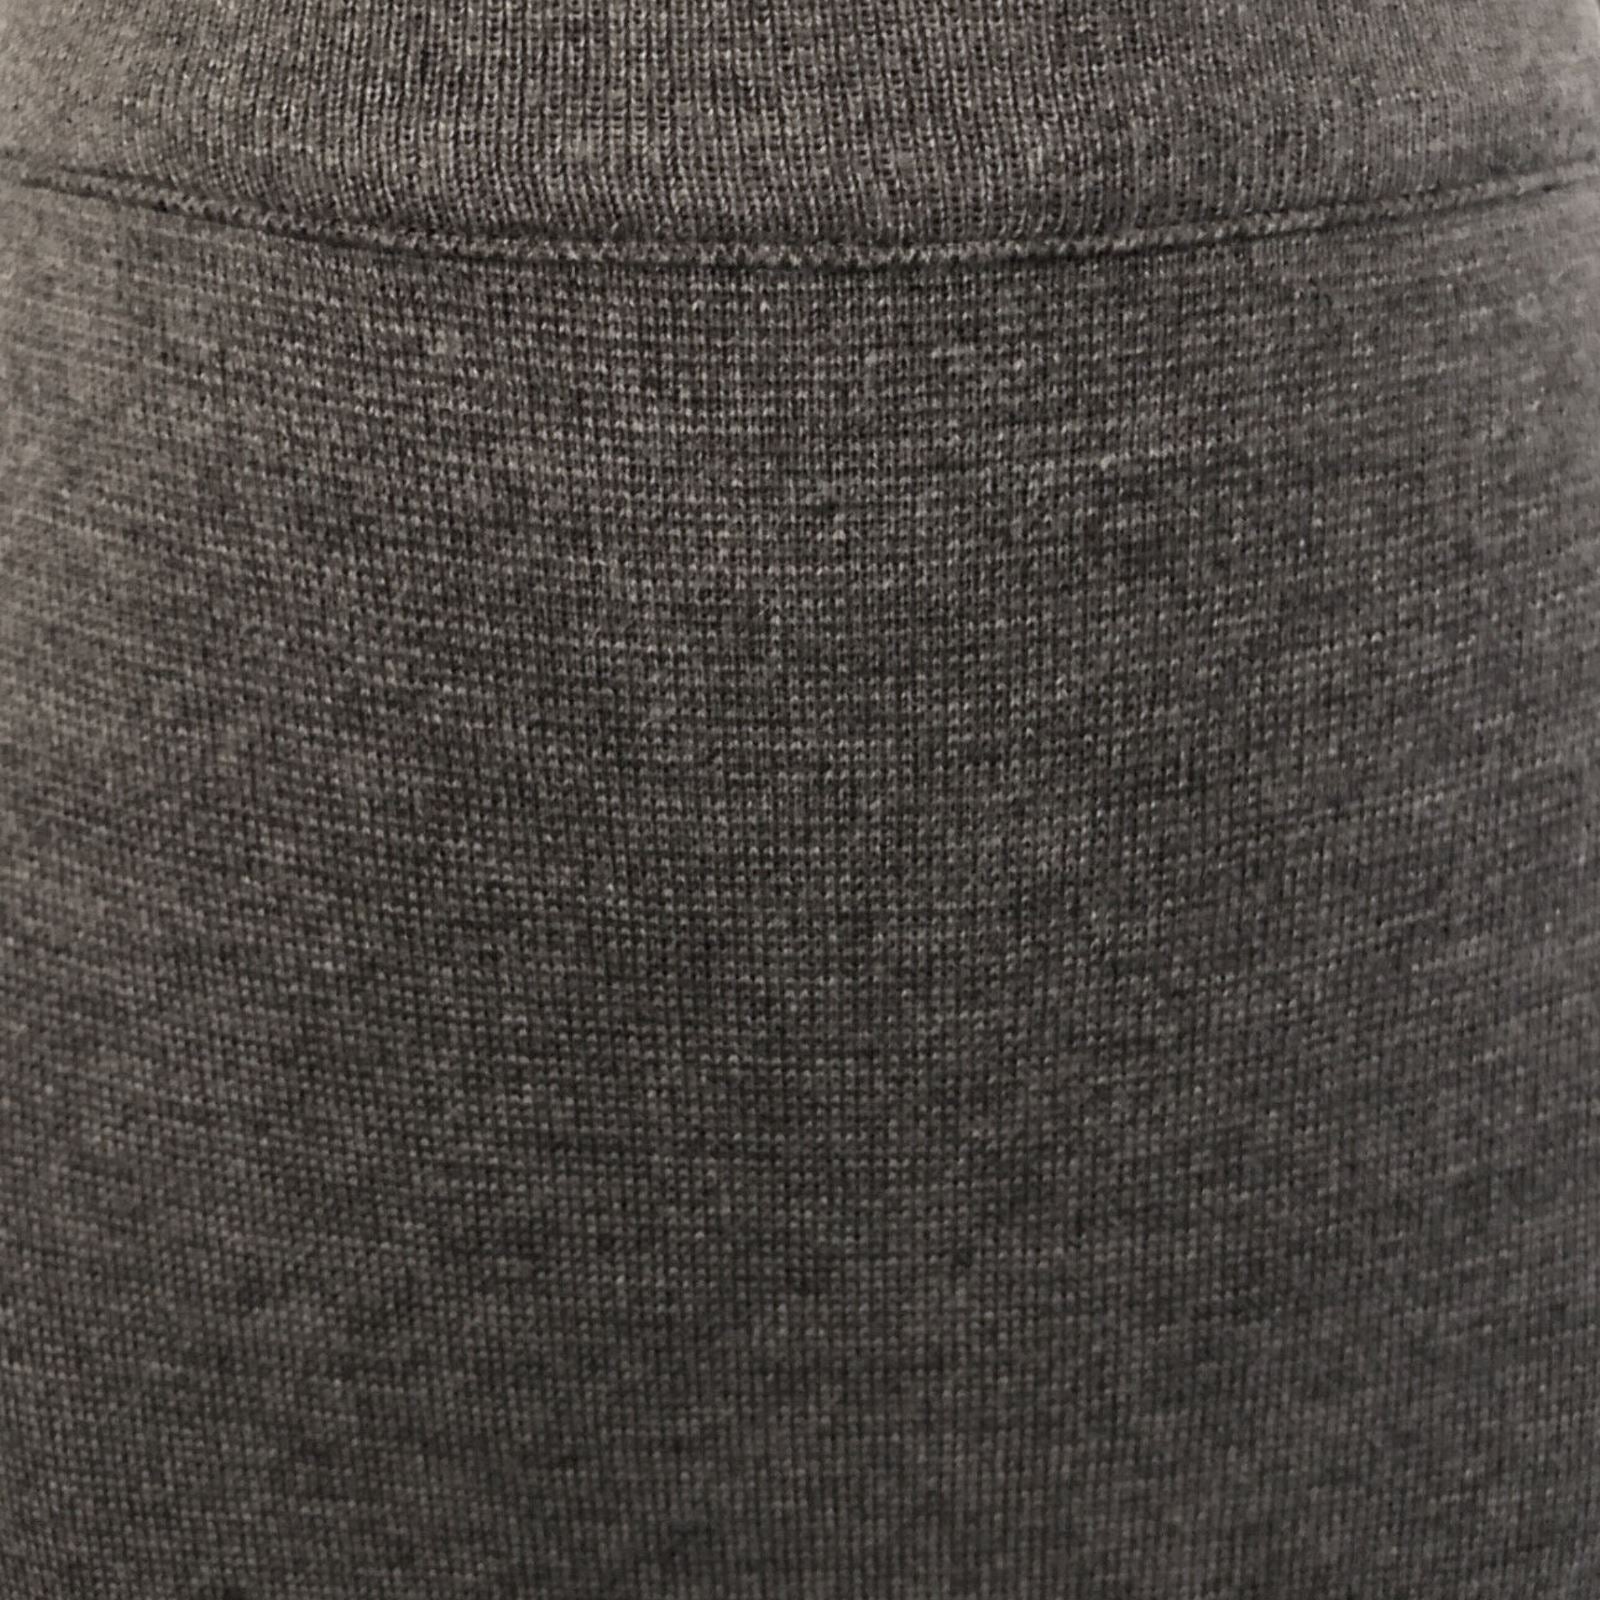 Devernois Grey Wool Mix Fine Knit Pencil Skirt UK 10/12 US 6/8 EU 38/40 Timeless Fashions